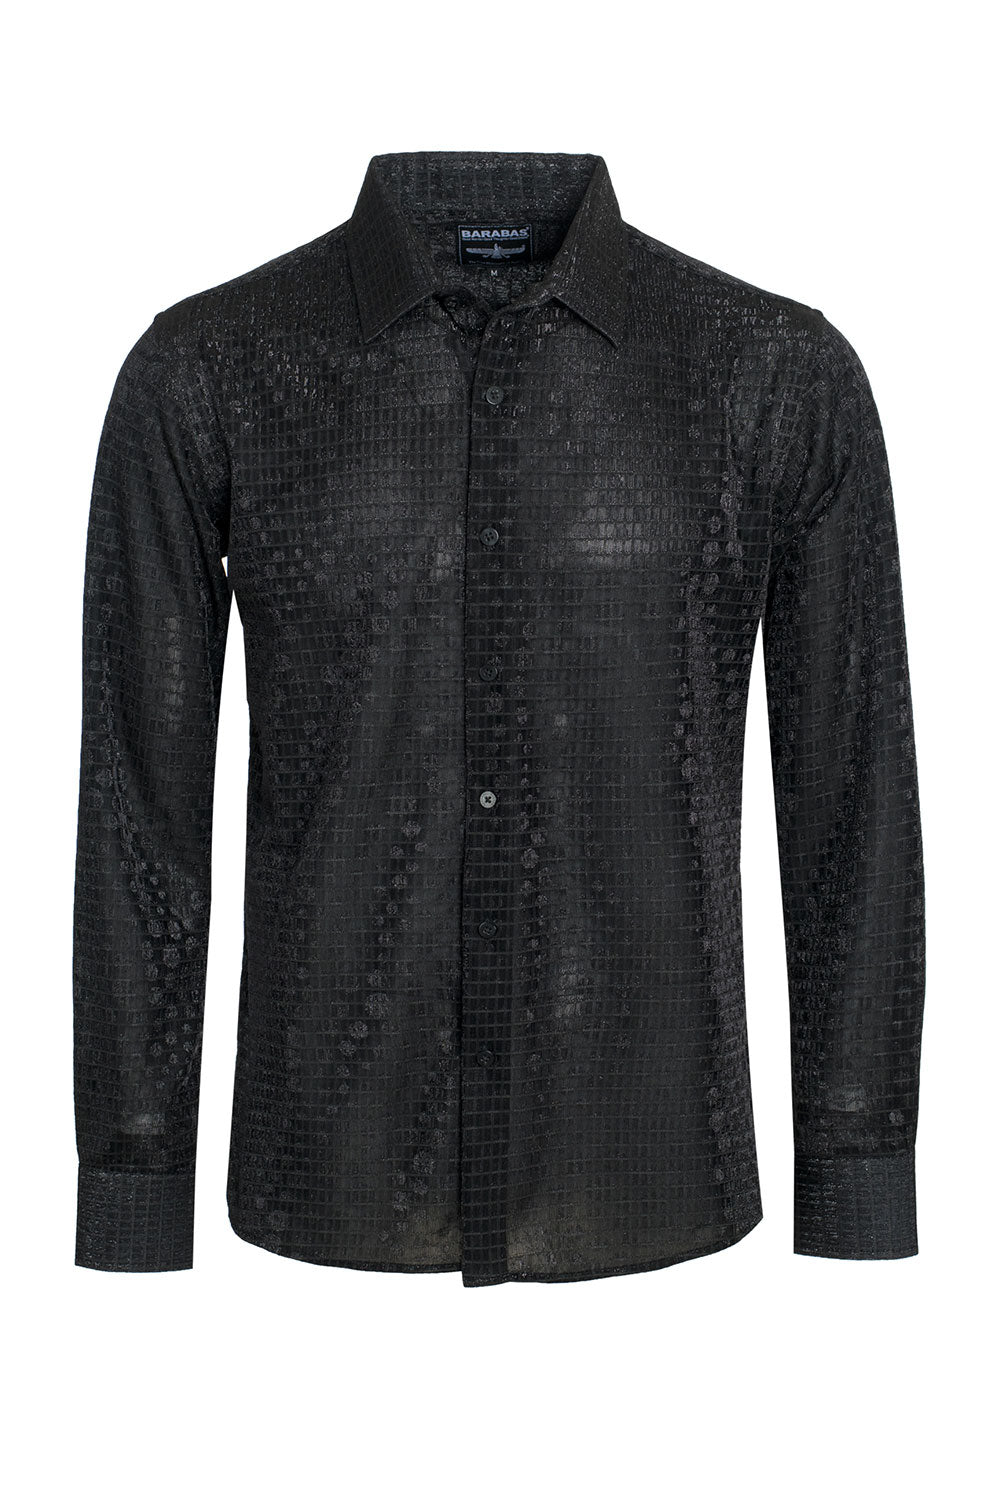 BARABAS Men's Black Textured Polka Dotted Dress Shirts B308